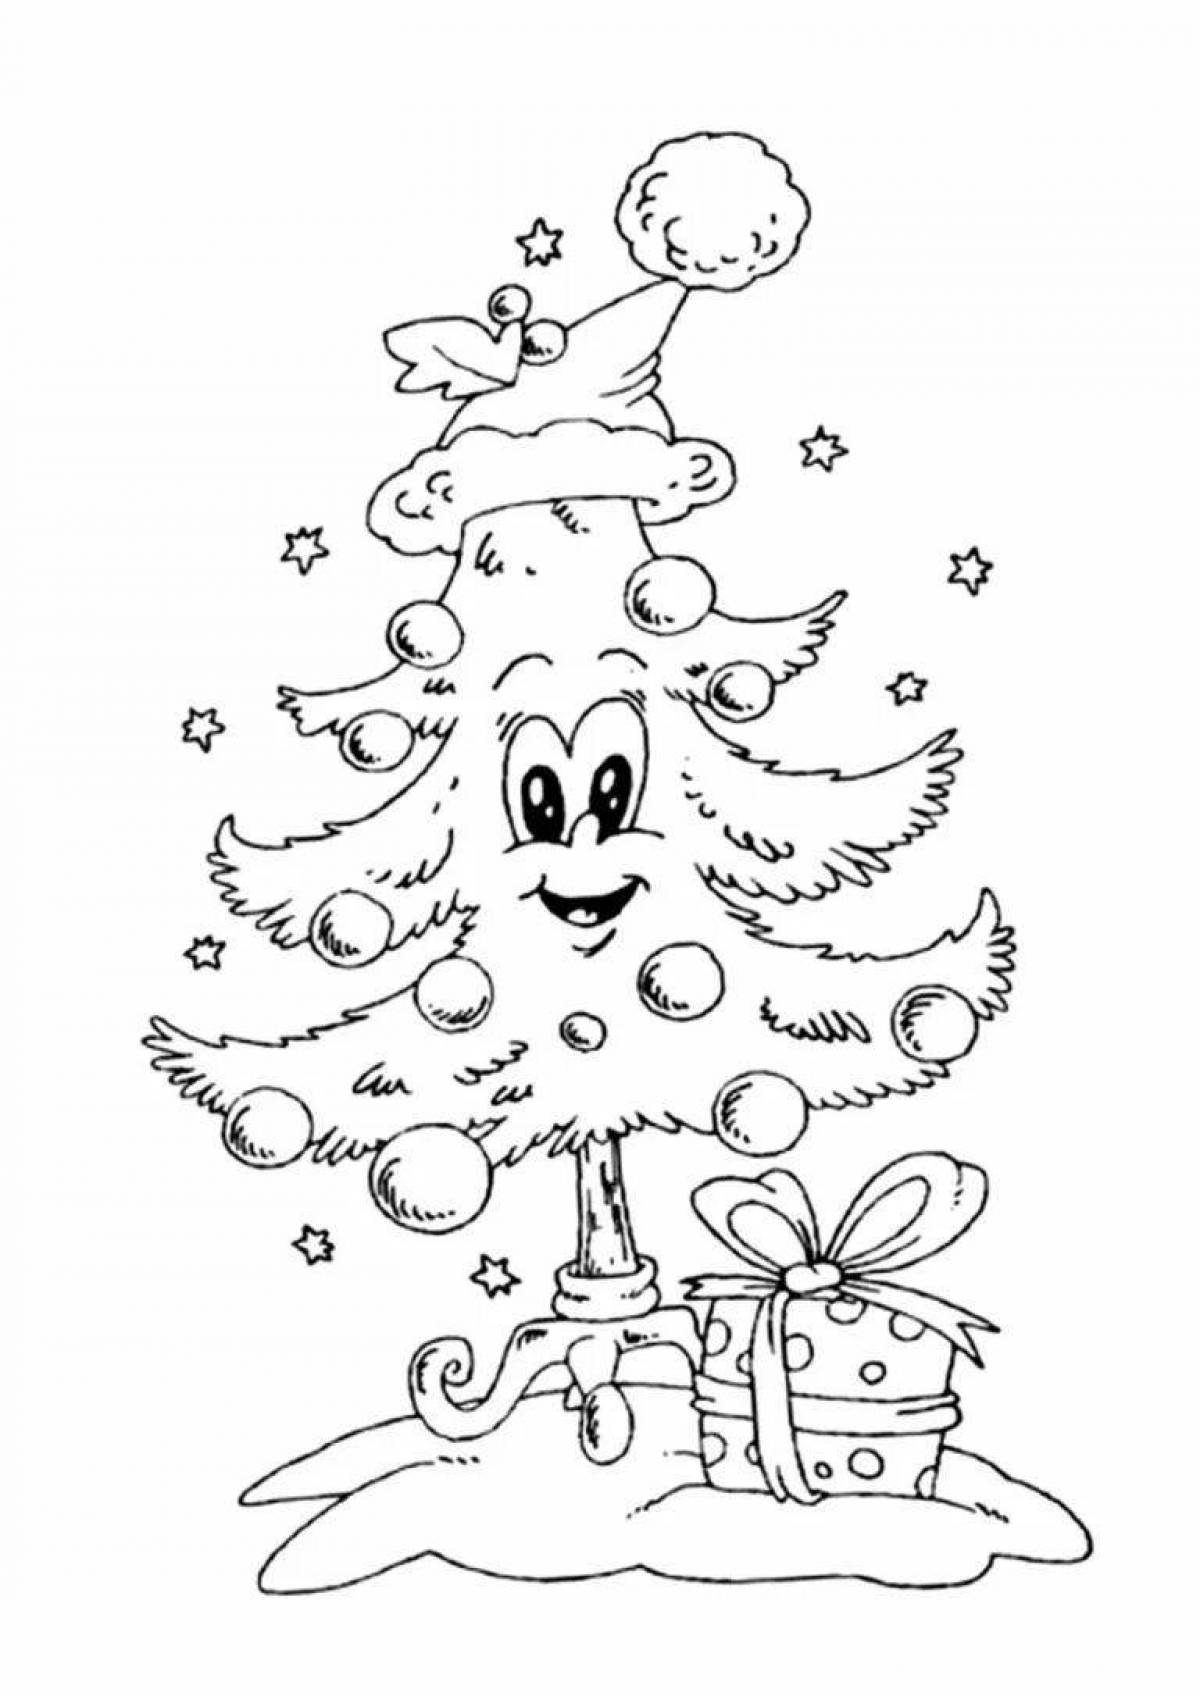 Children's whimsical Christmas drawing